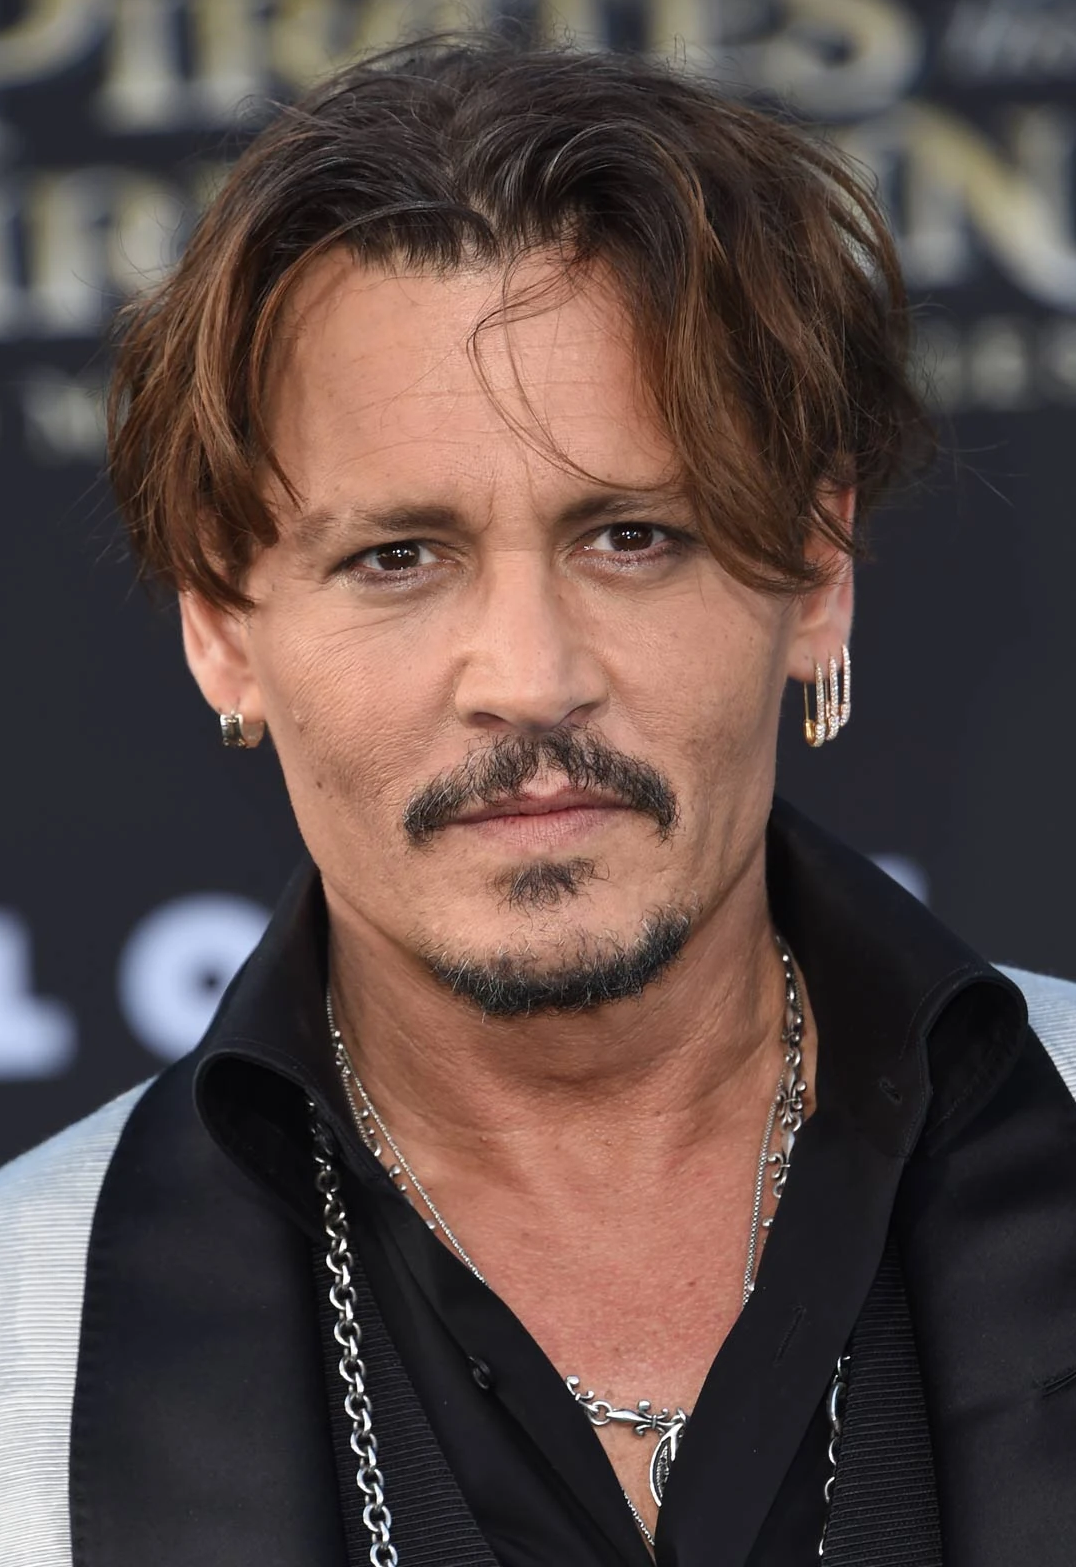 ReemDepp - Johnny Depp is A Legend 🦇 on X: 